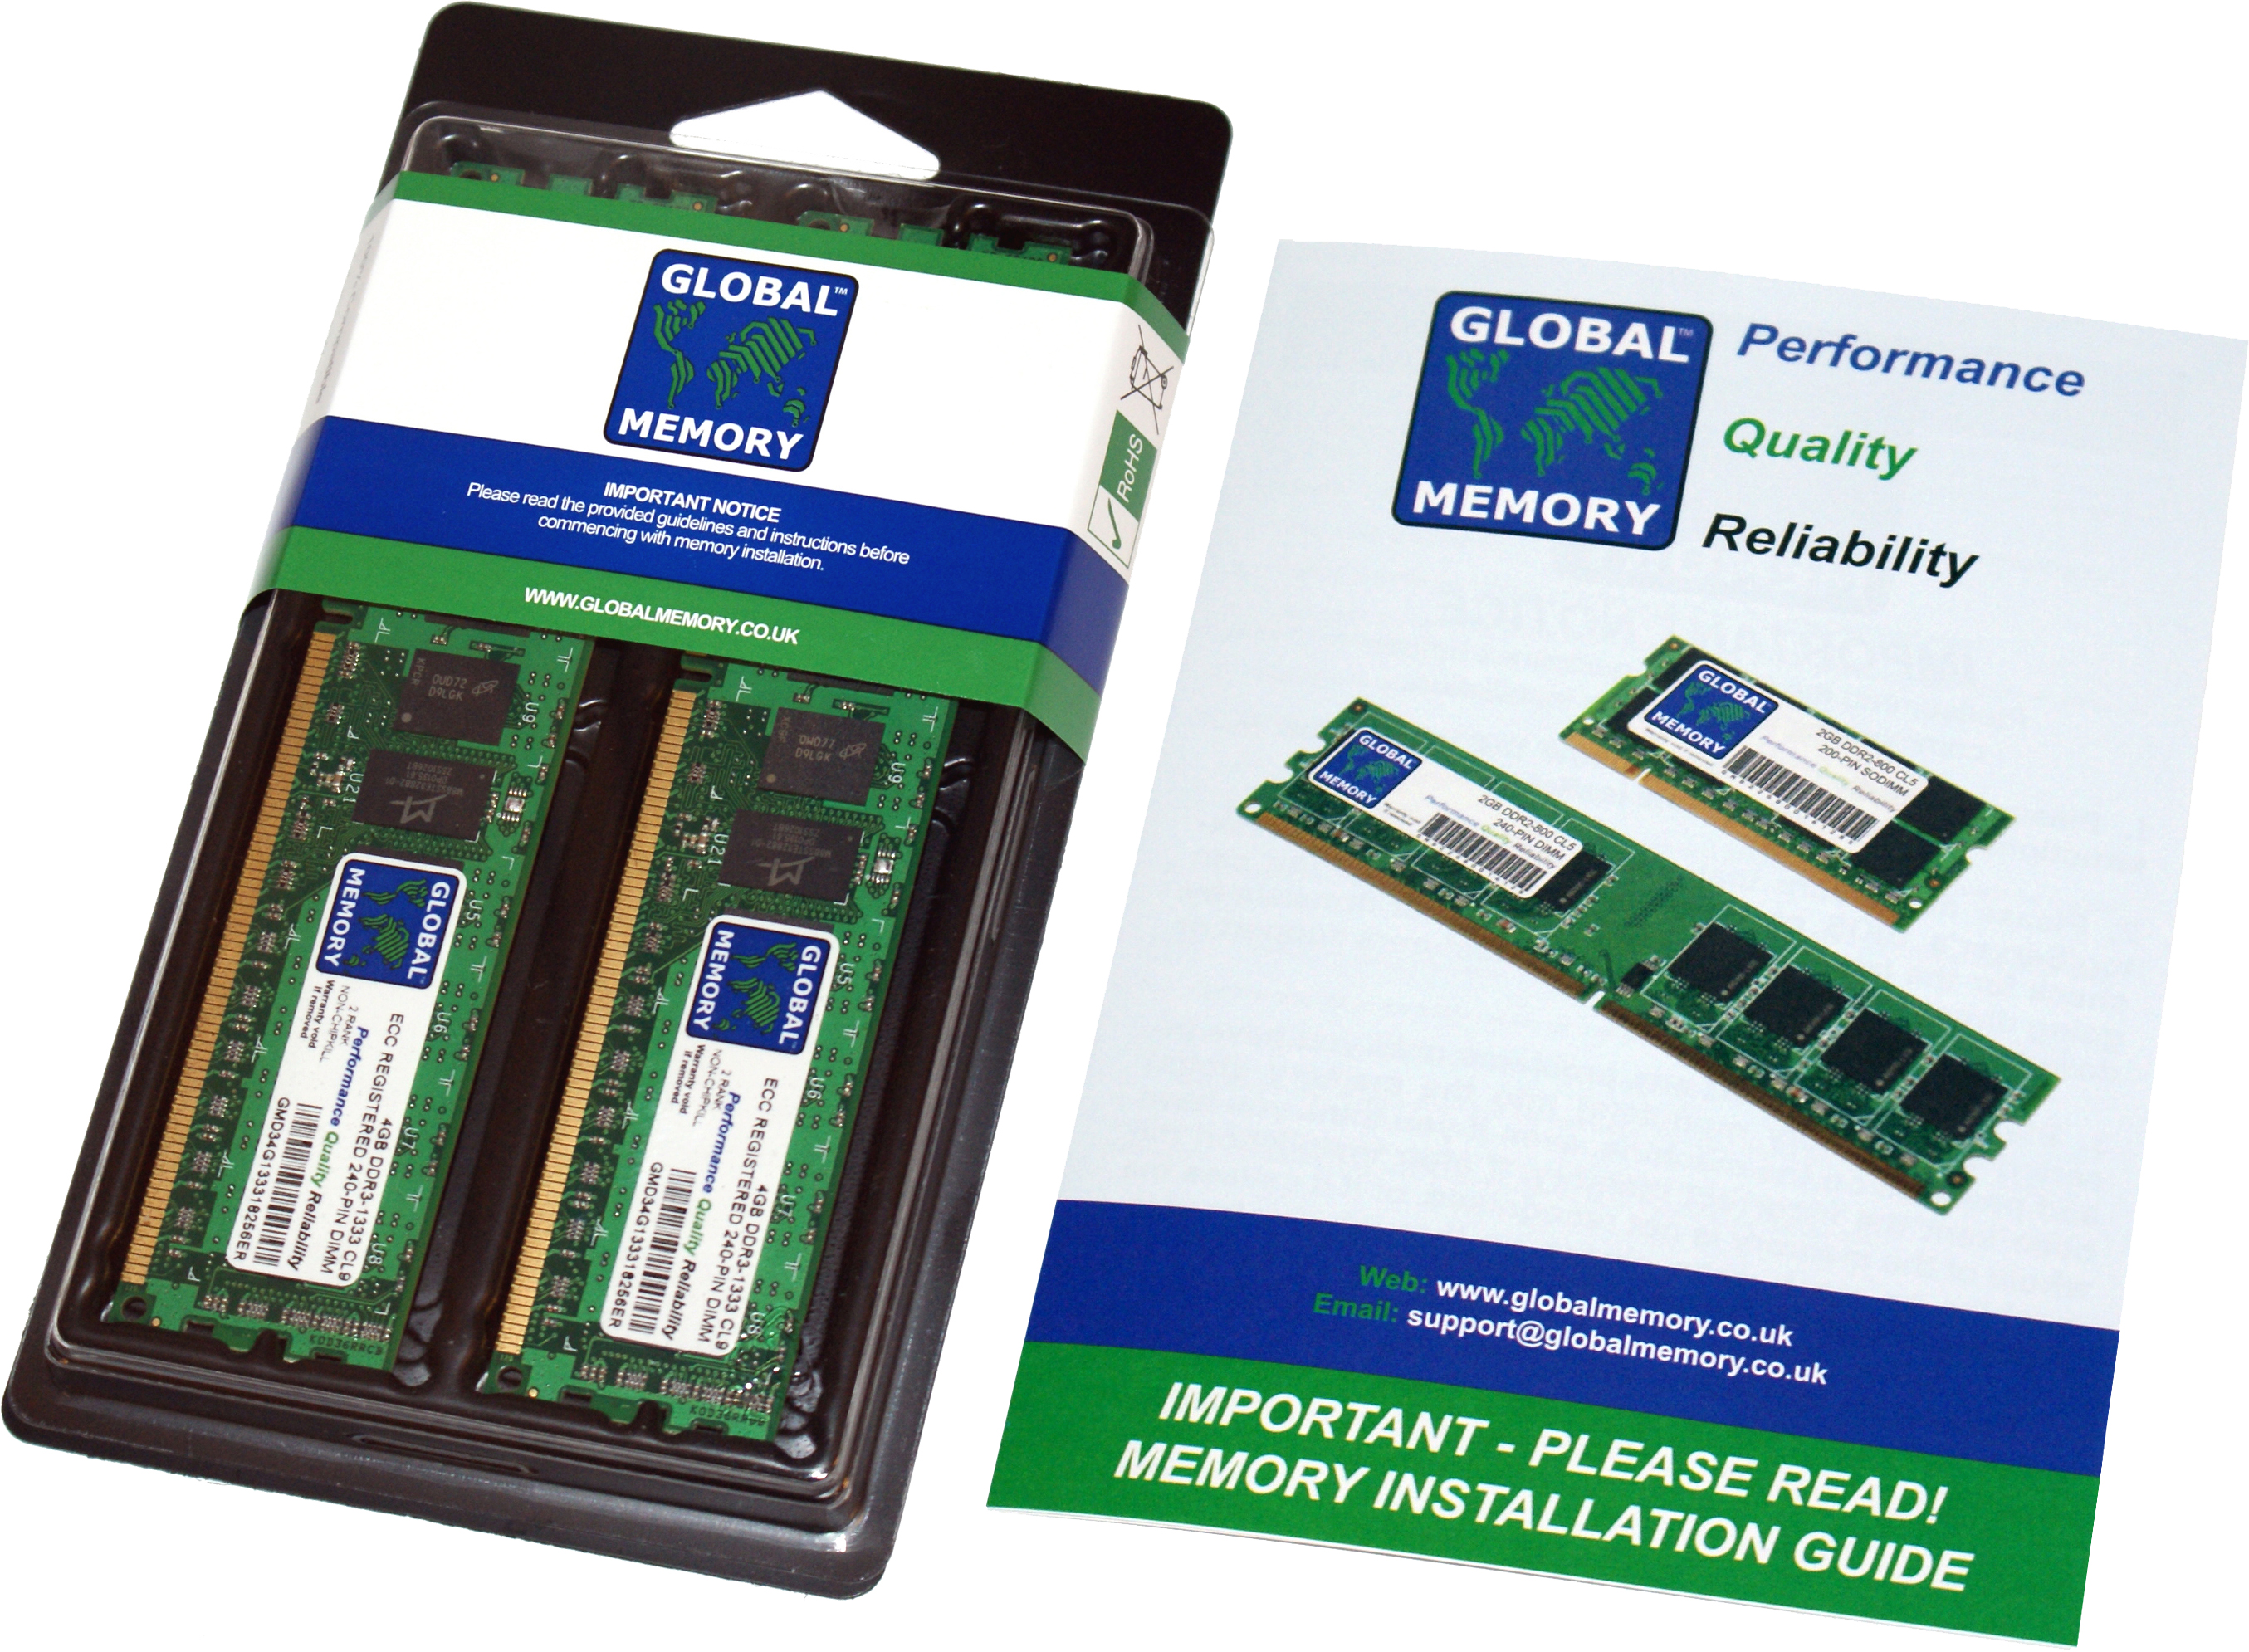 16GB (2 x 8GB) DDR4 2933MHz PC4-23400 288-PIN ECC REGISTERED DIMM (RDIMM) MEMORY RAM KIT FOR LENOVO SERVERS/WORKSTATIONS (2 RANK KIT CHIPKILL)